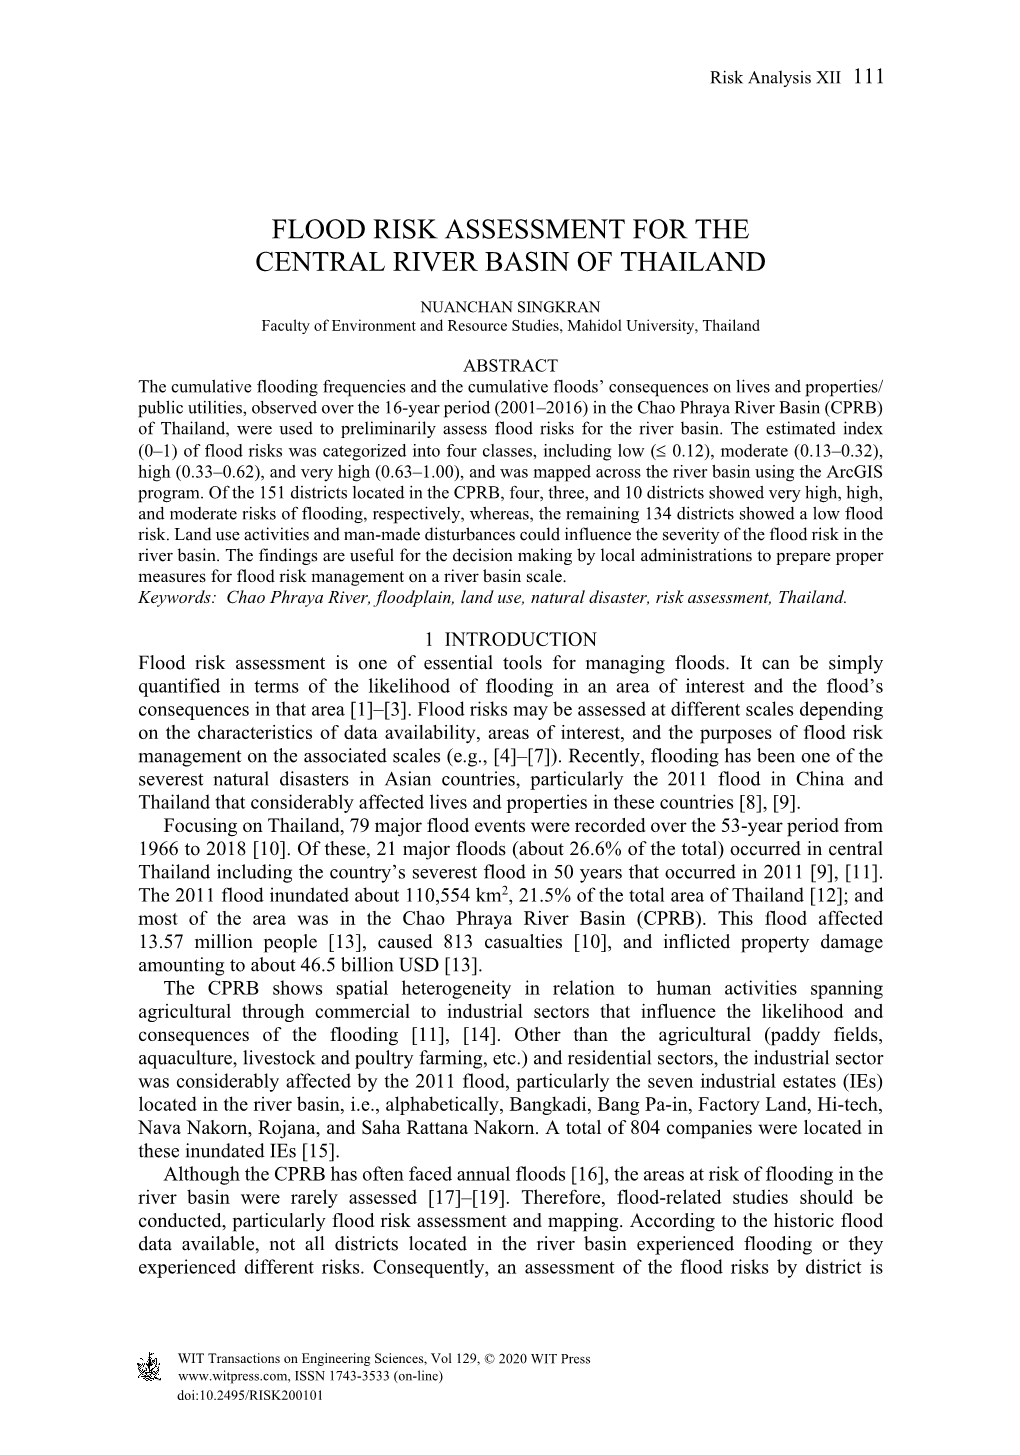 Flood Risk Assessment for the Central River Basin of Thailand